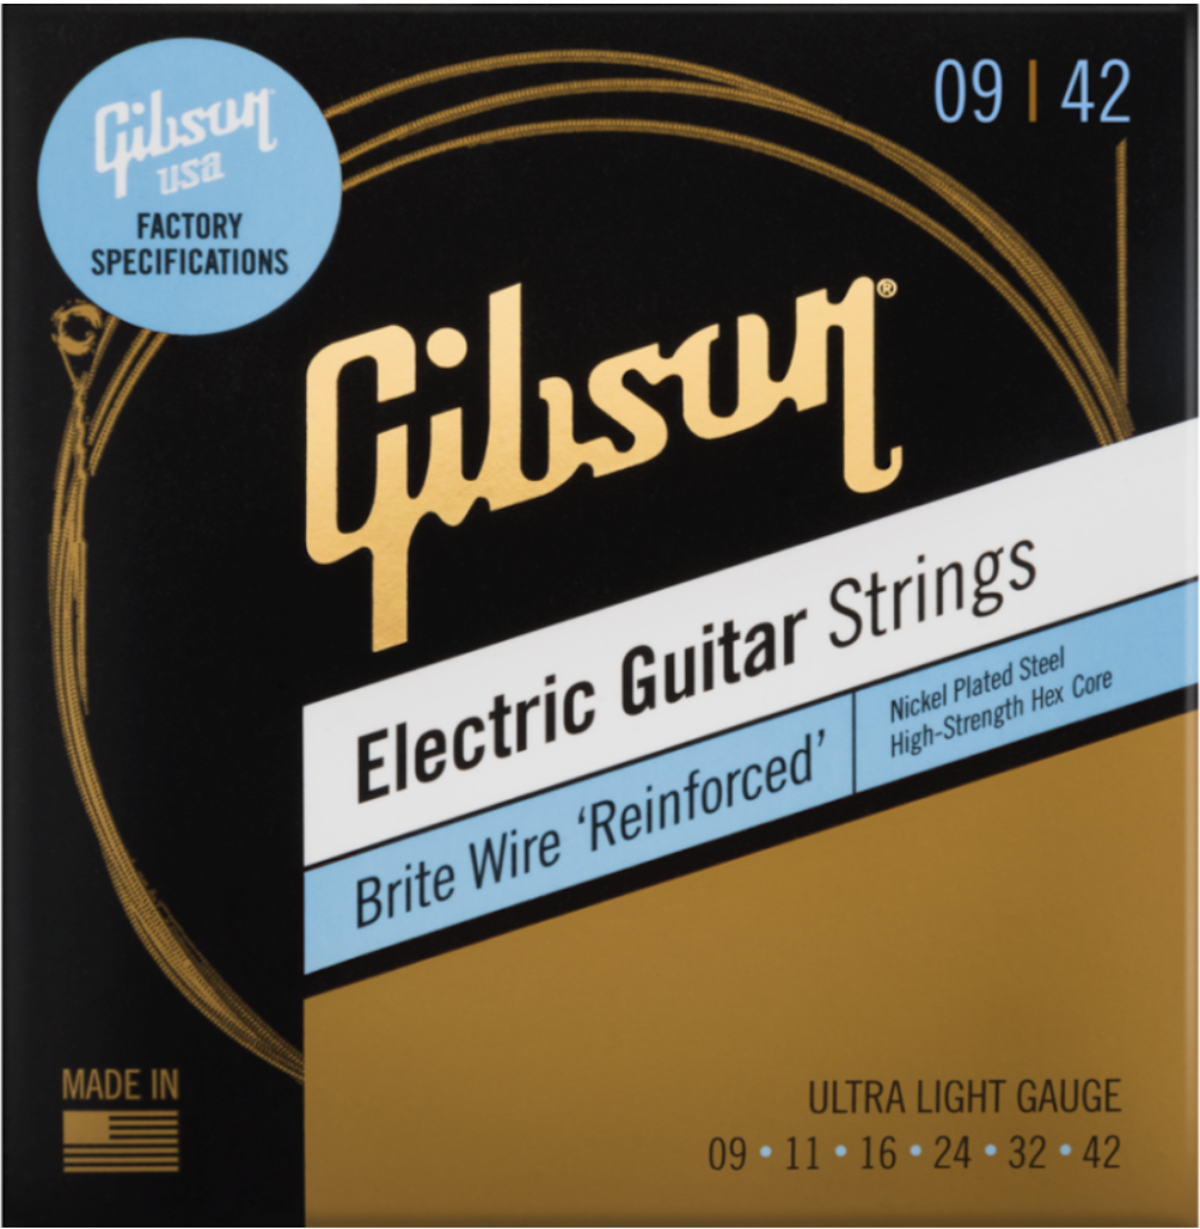 Se Gibson Brite Wire 'Reinforced' Guitarstrenge (Ultra-Light) hos Drum City